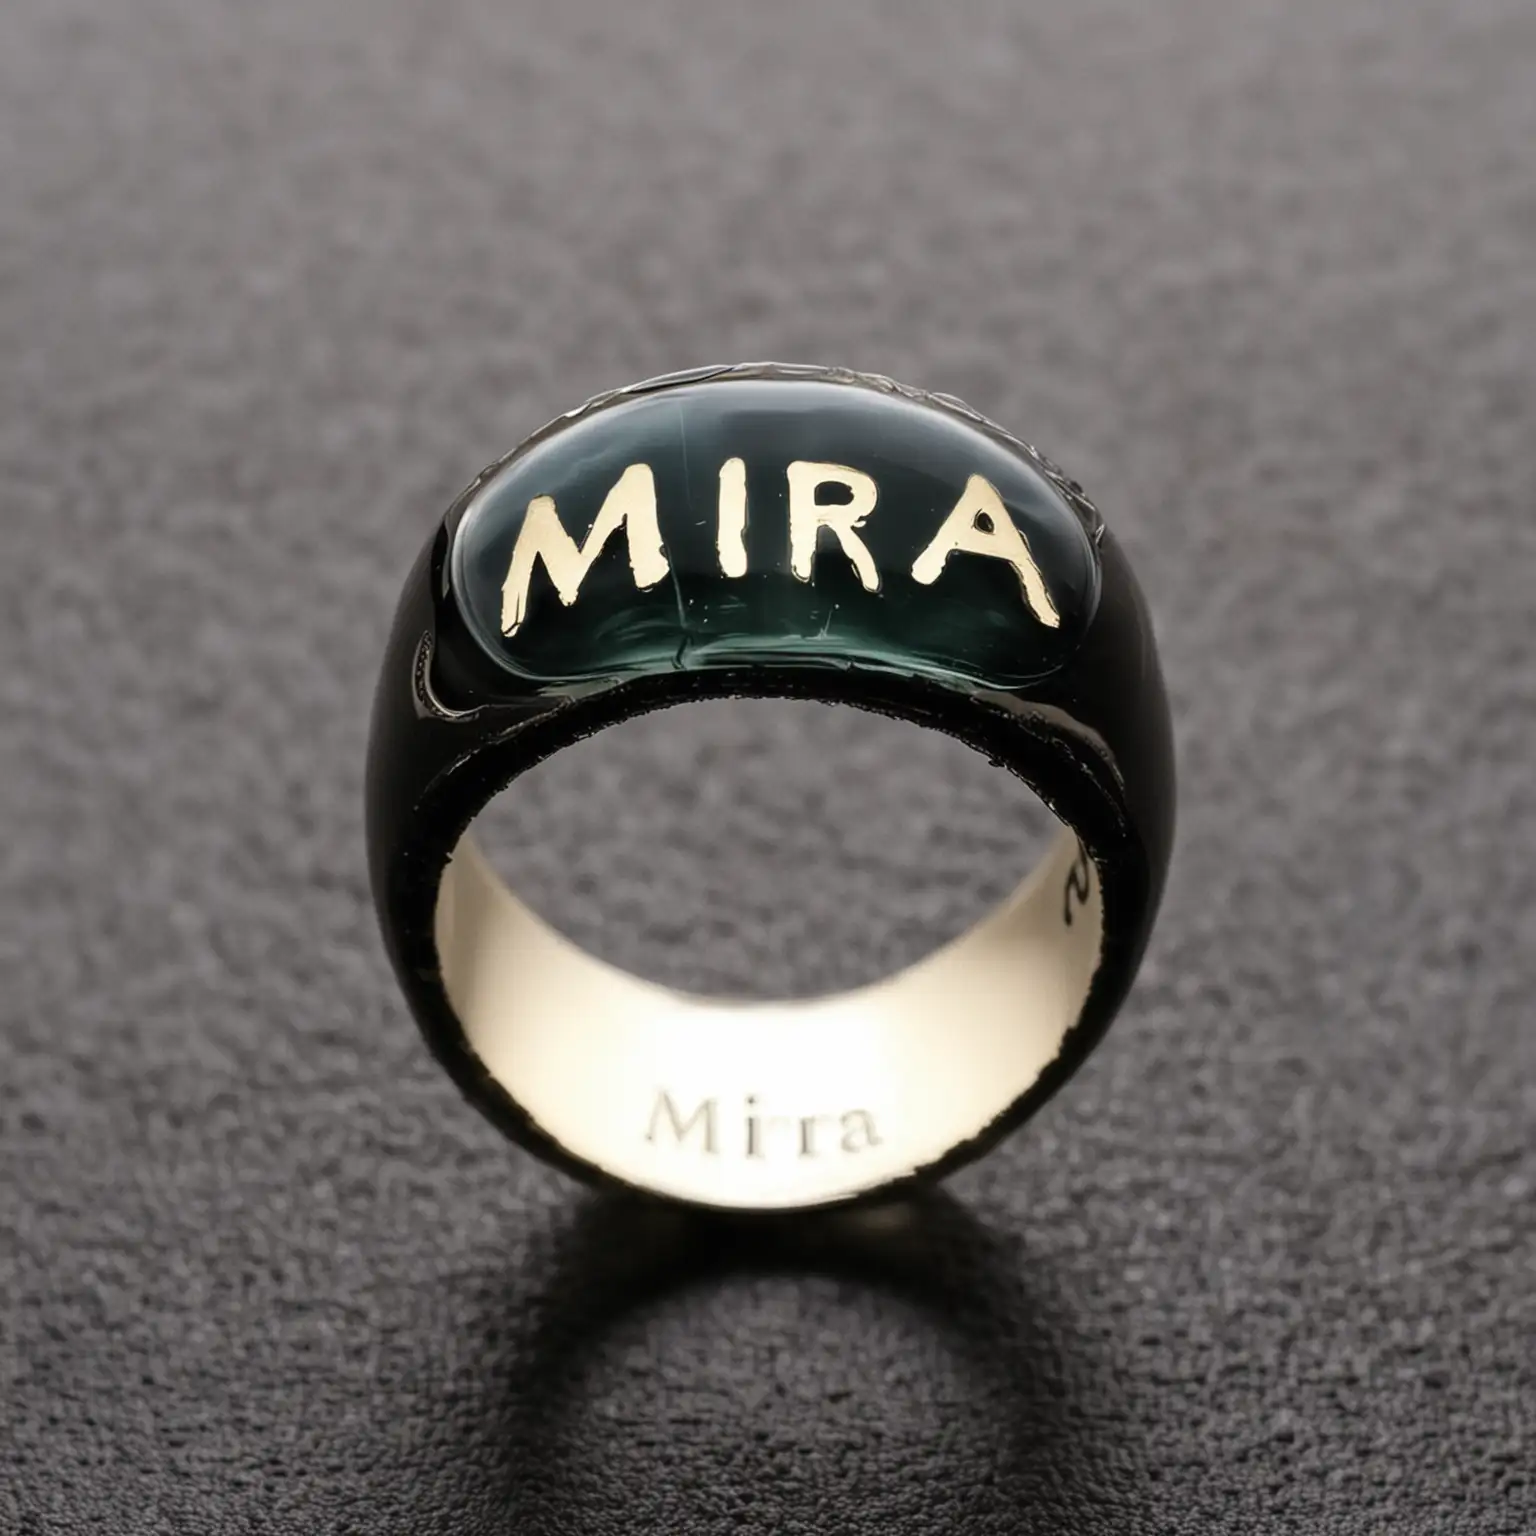 Elegant Resin Ring Mira with Dark Shadow Background